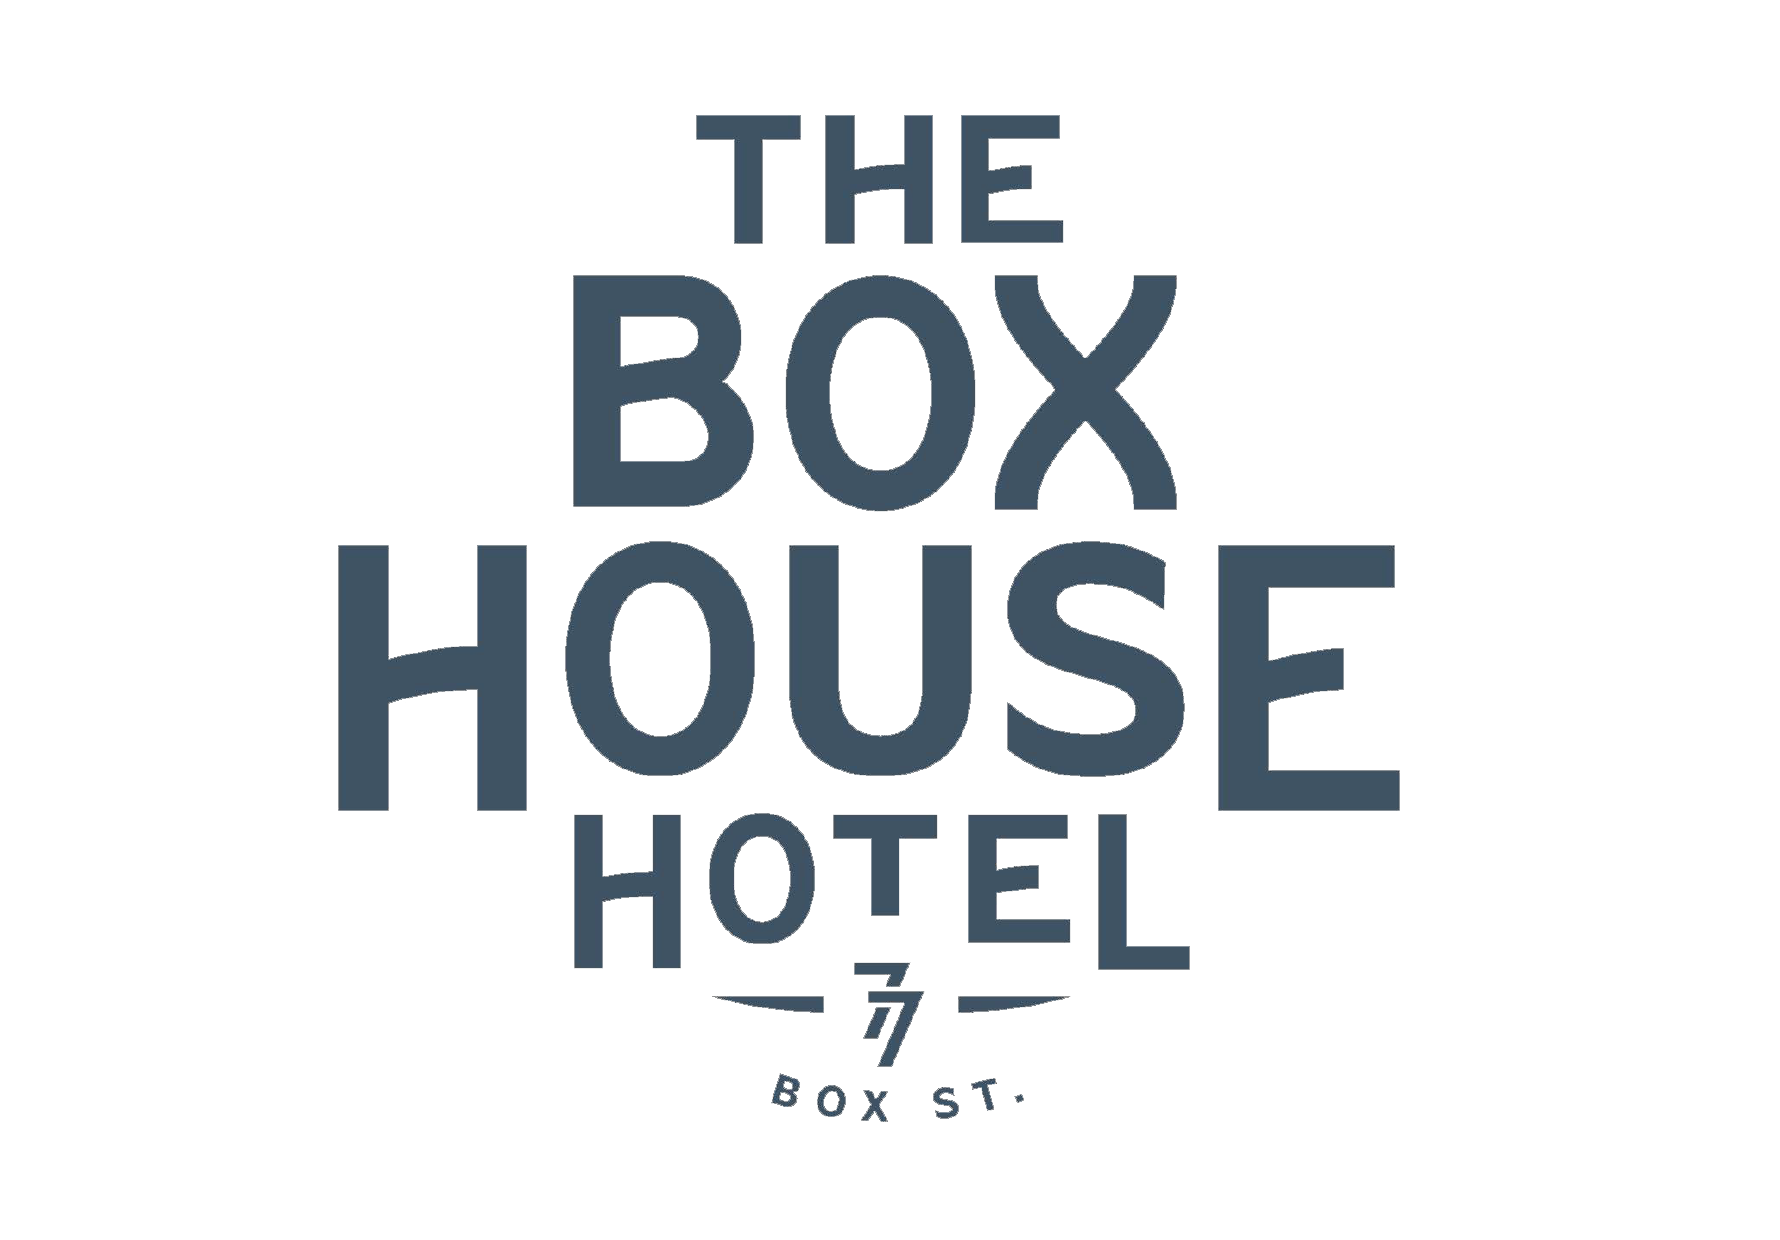 Box House Hotel + logo.png